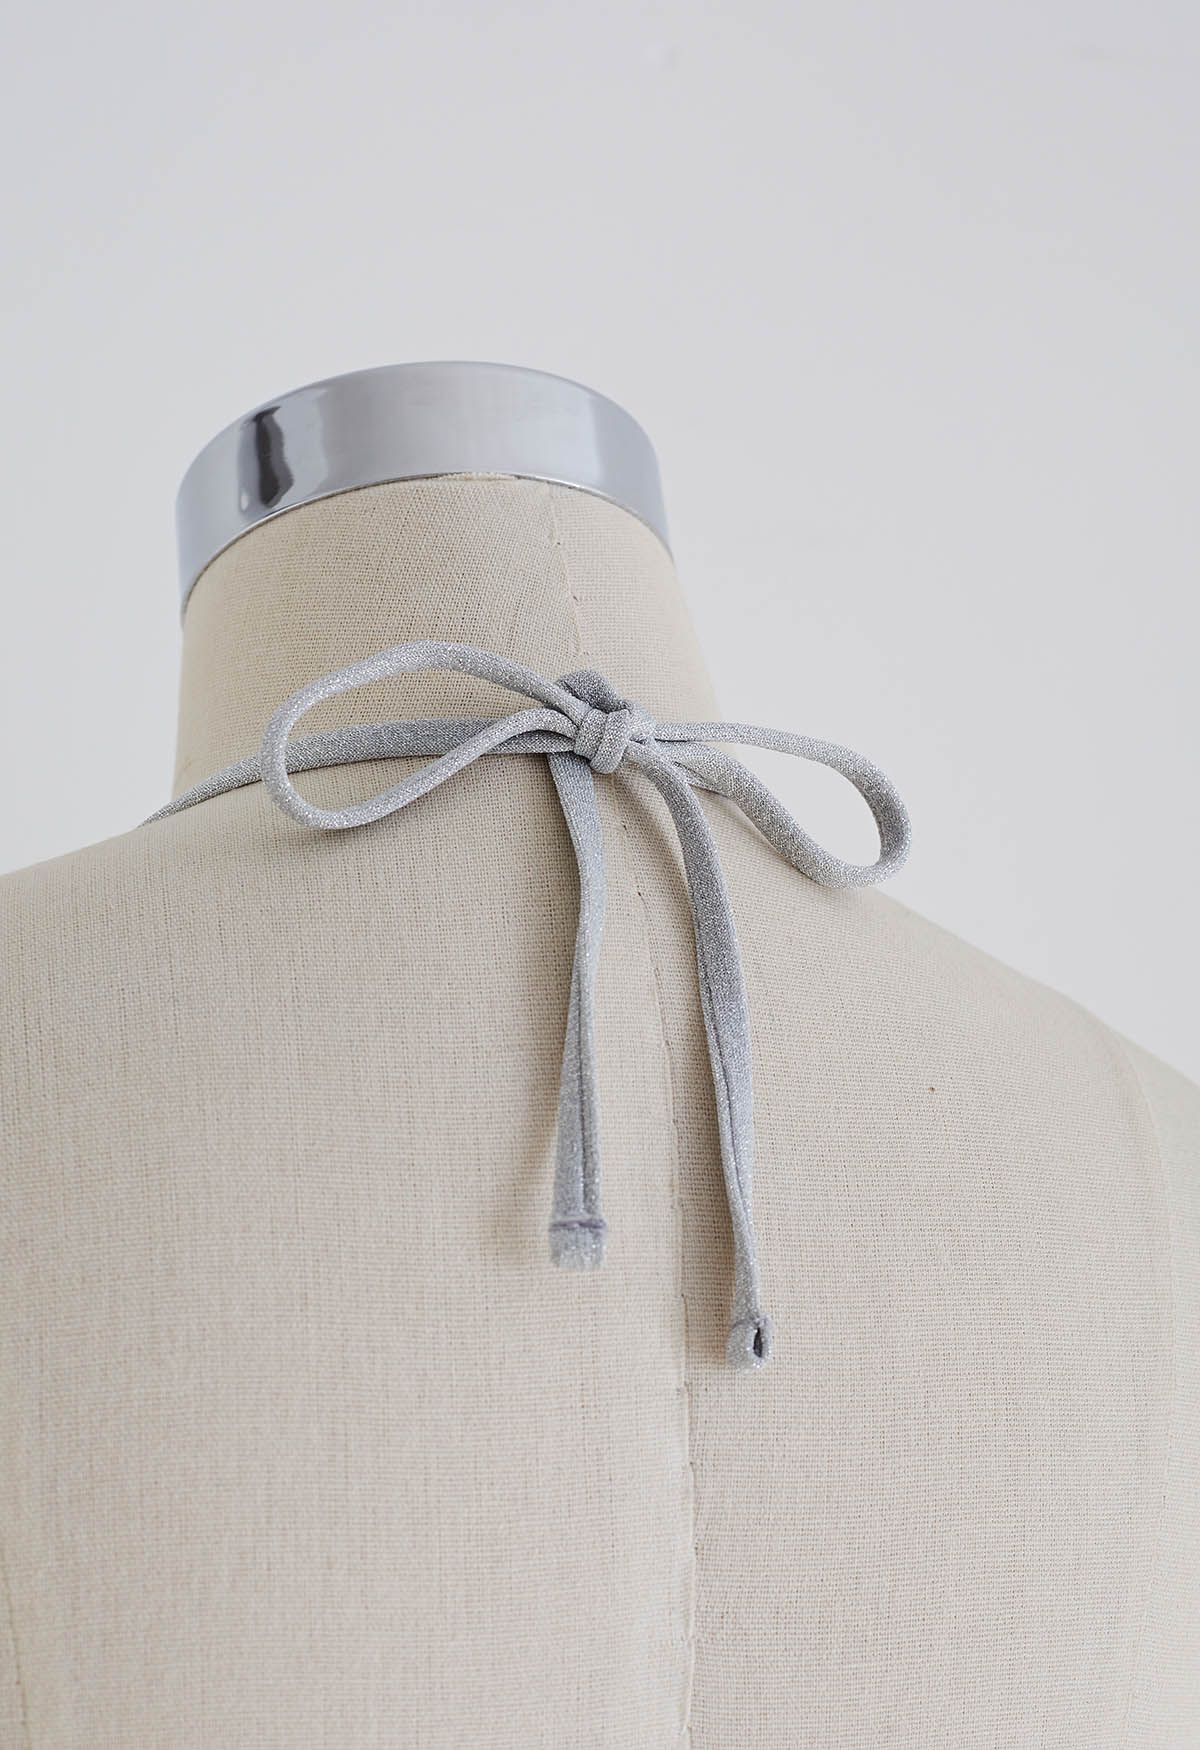 Dazzling Metallic Tie-String Bikini Set in Grey